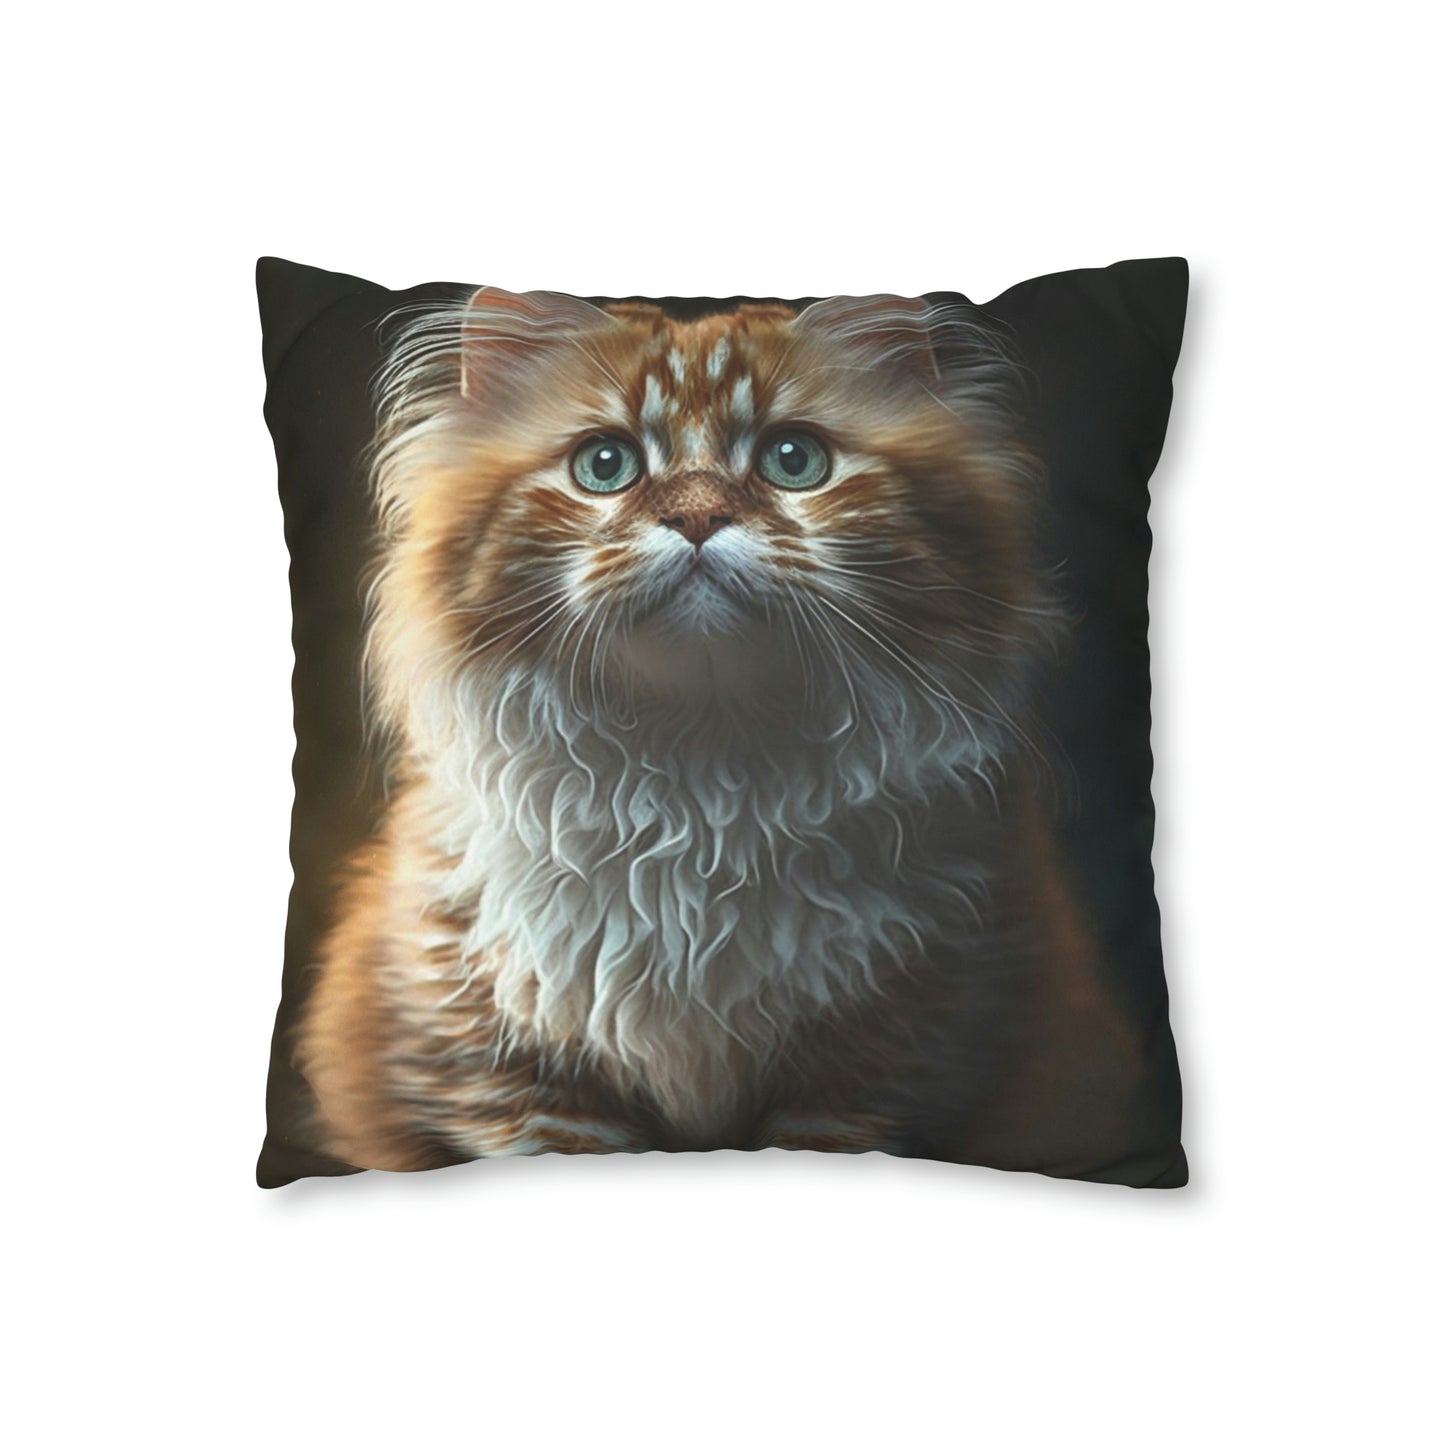 Cat PillowCase Square Faux Suede Beautiful High Quality Square Cat Pillowcase